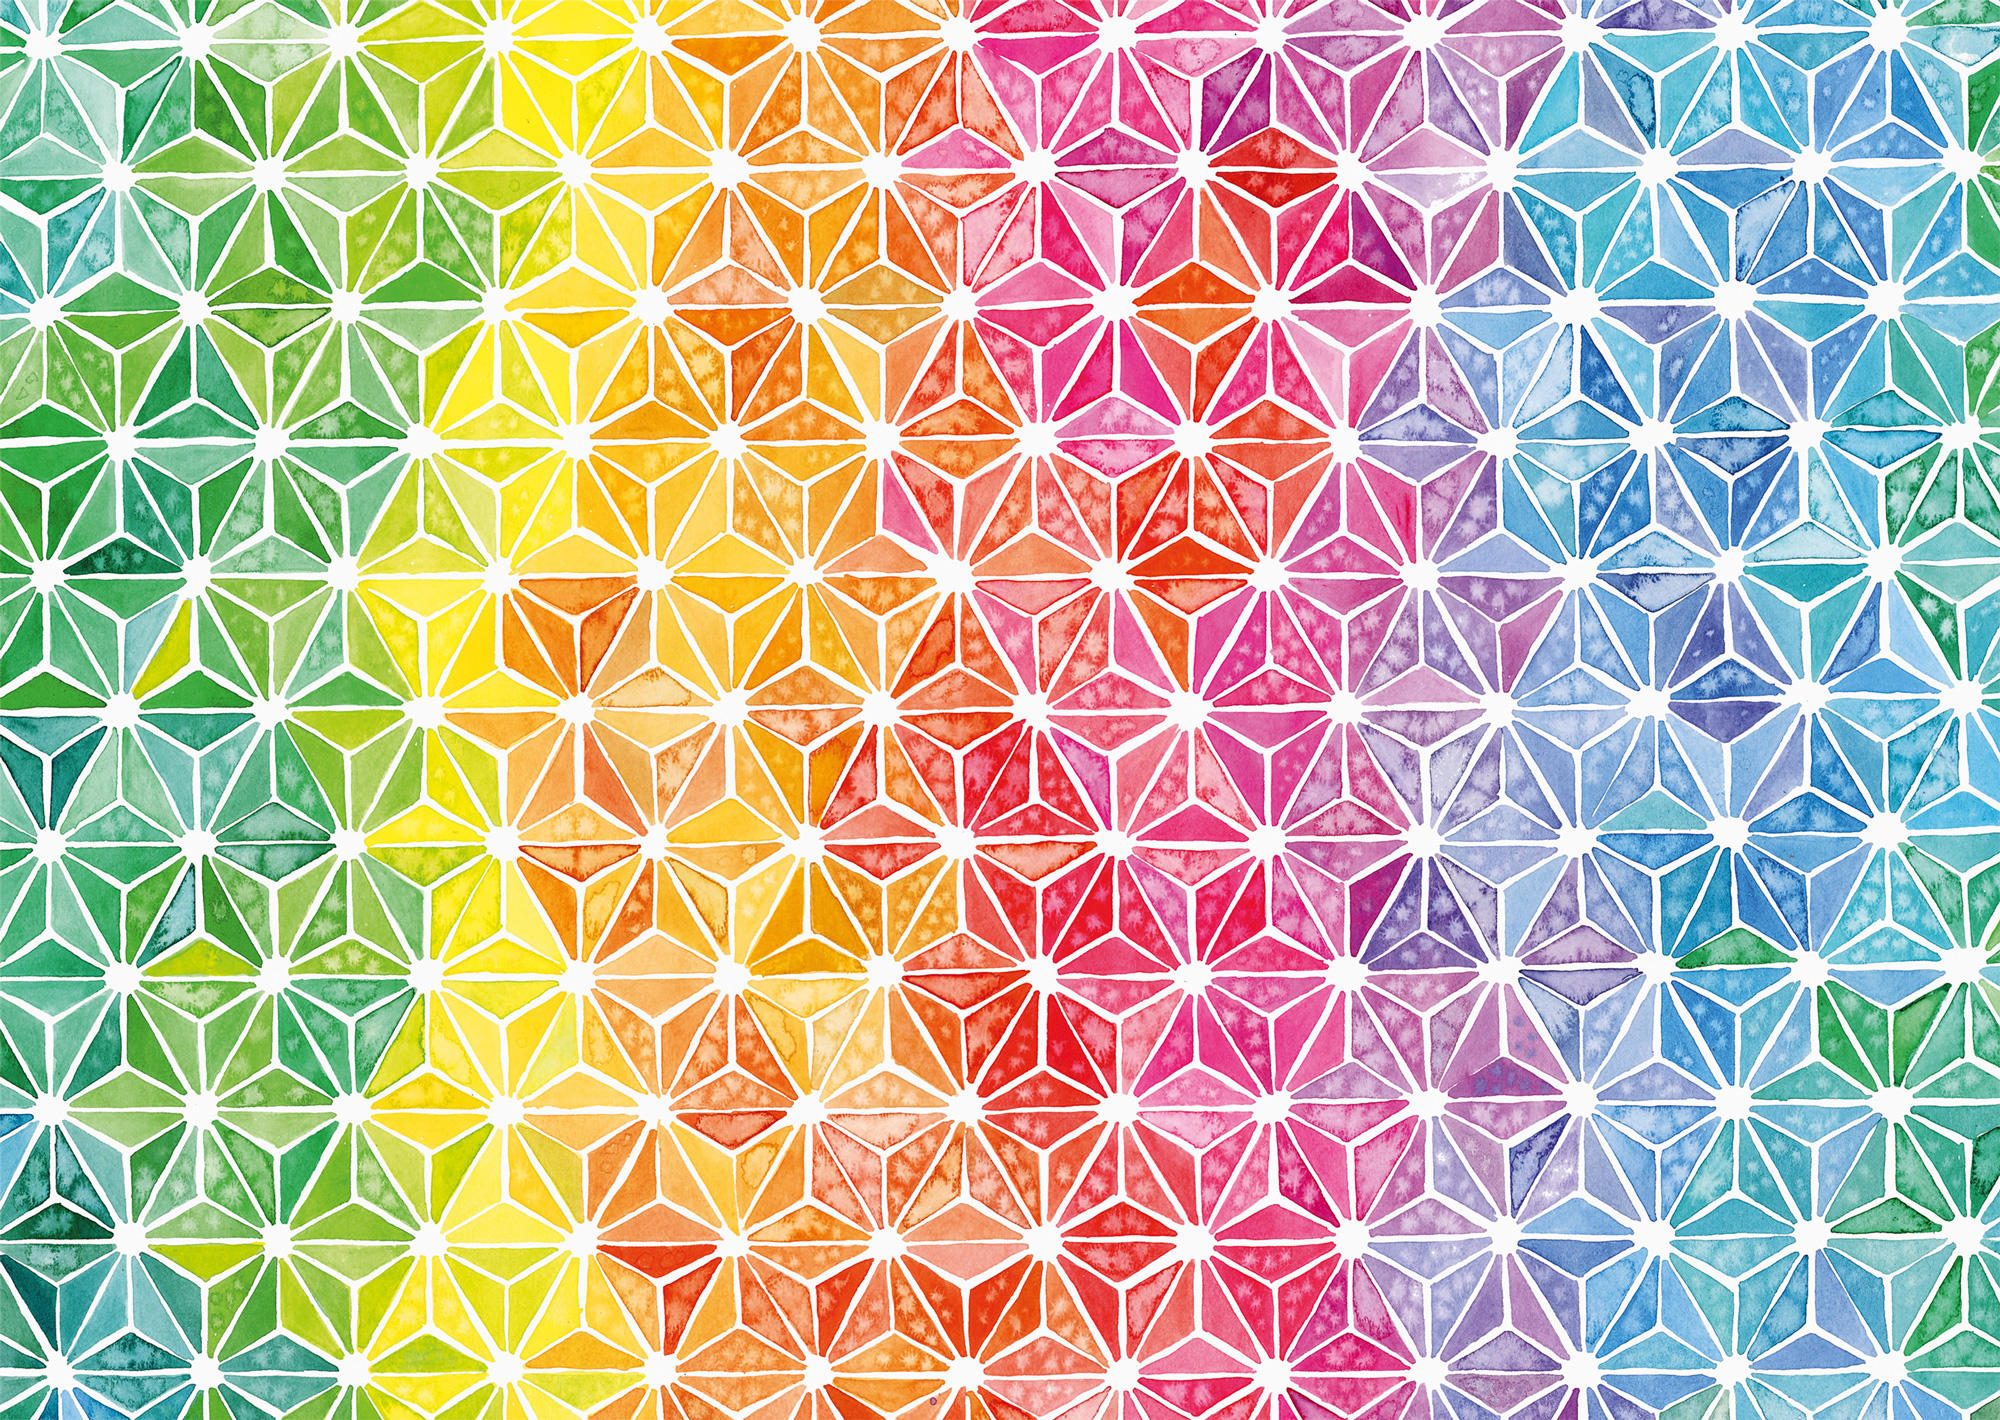 Puzzle Josie Lewis: Kolorowe trójkąty